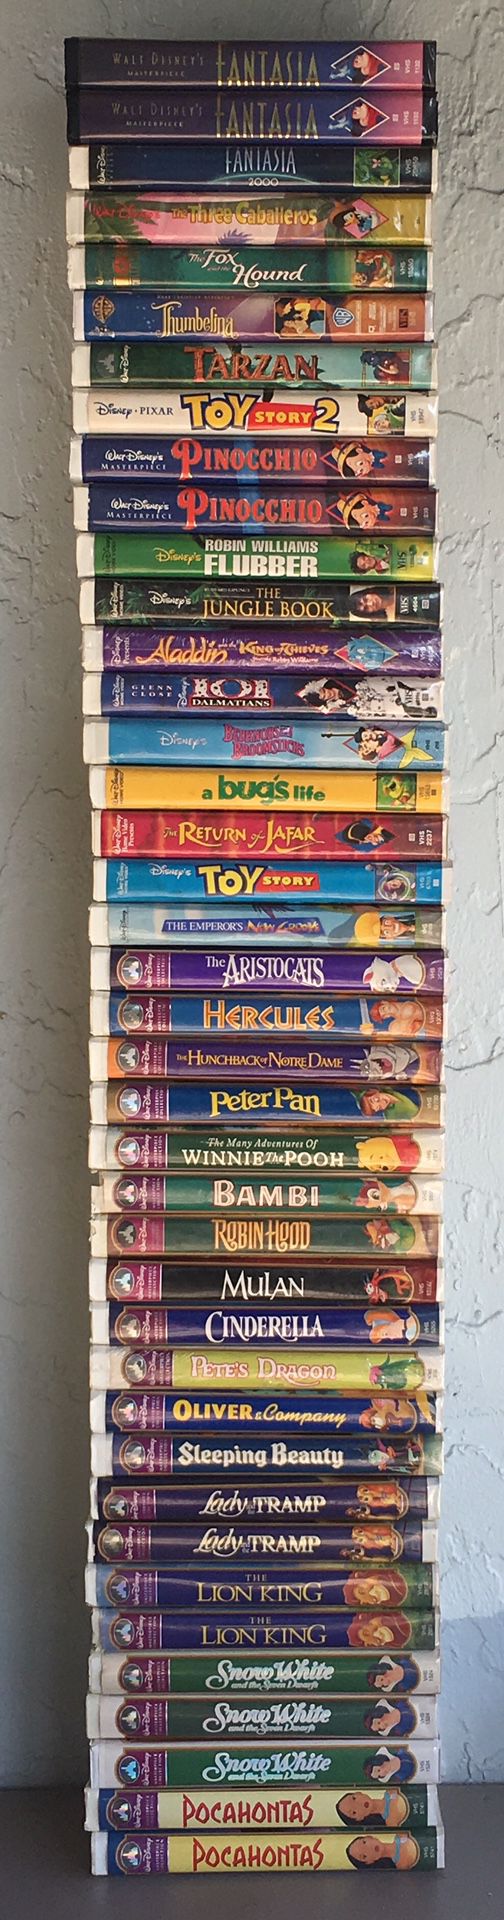 40 Disney VHS Movies